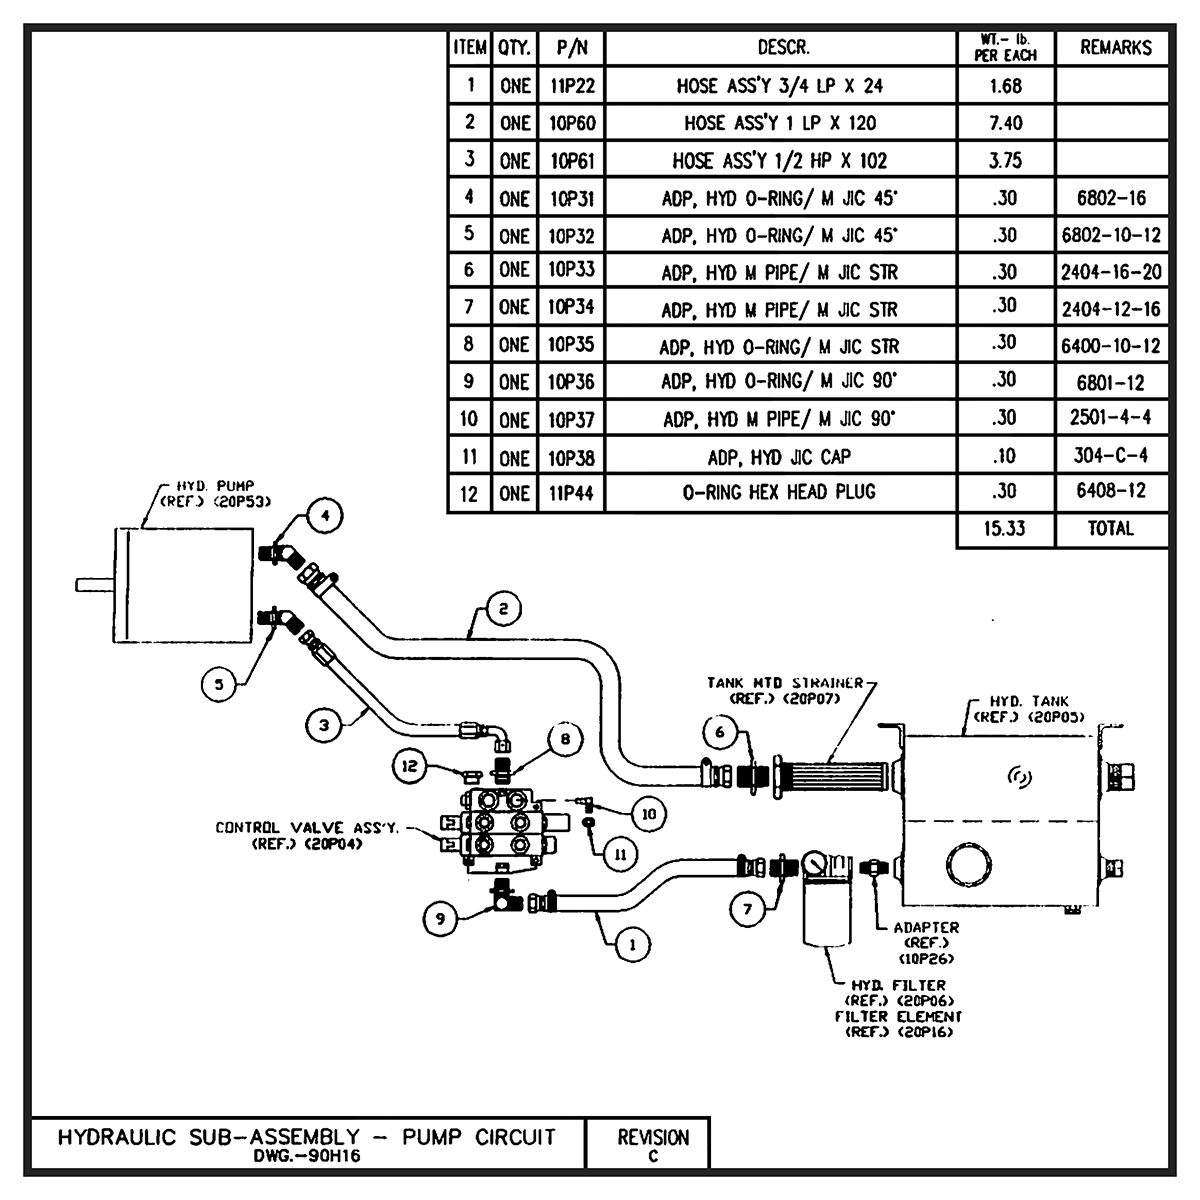 Swaploader SL-125 Pump Circuit Hydraulic Sub-Assembly Diagram